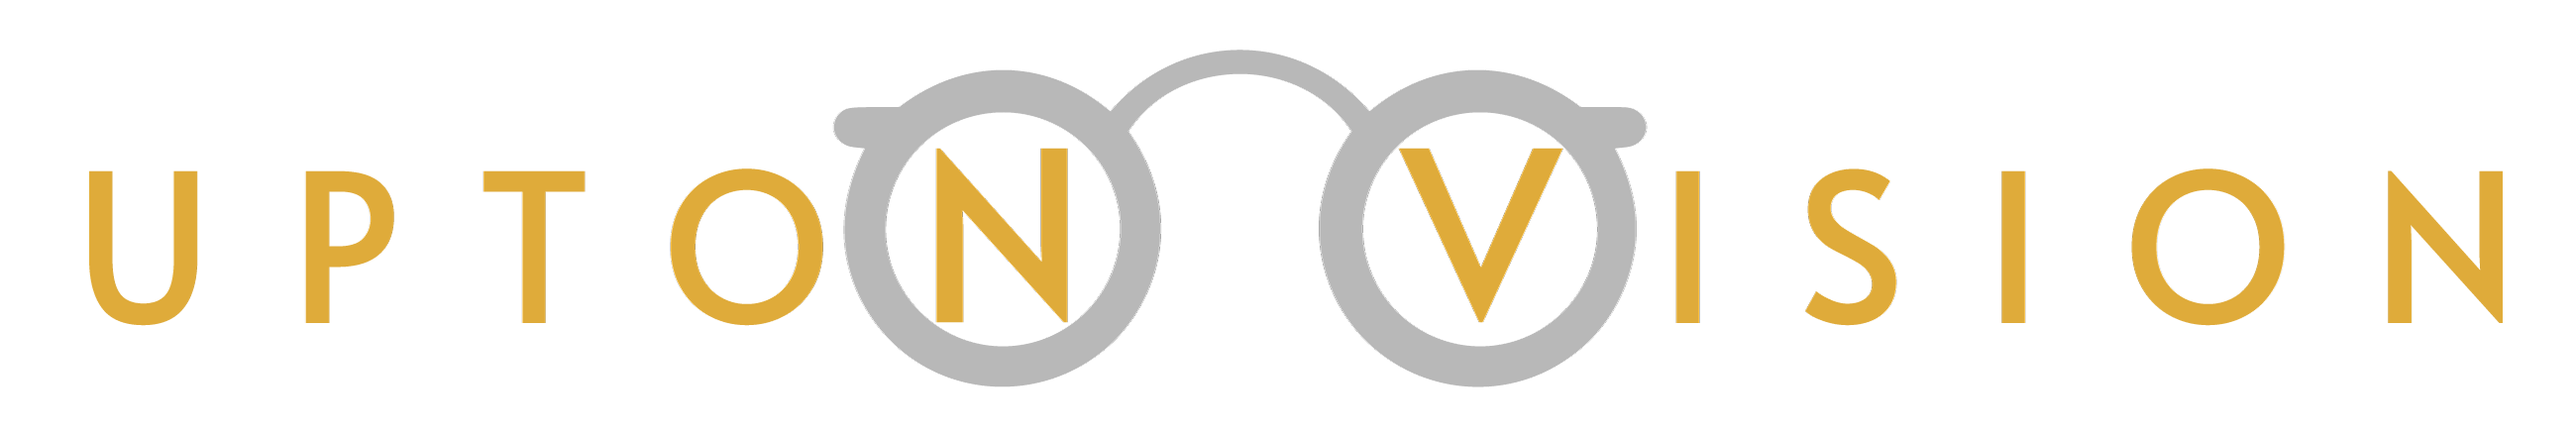 Upton Vision logo